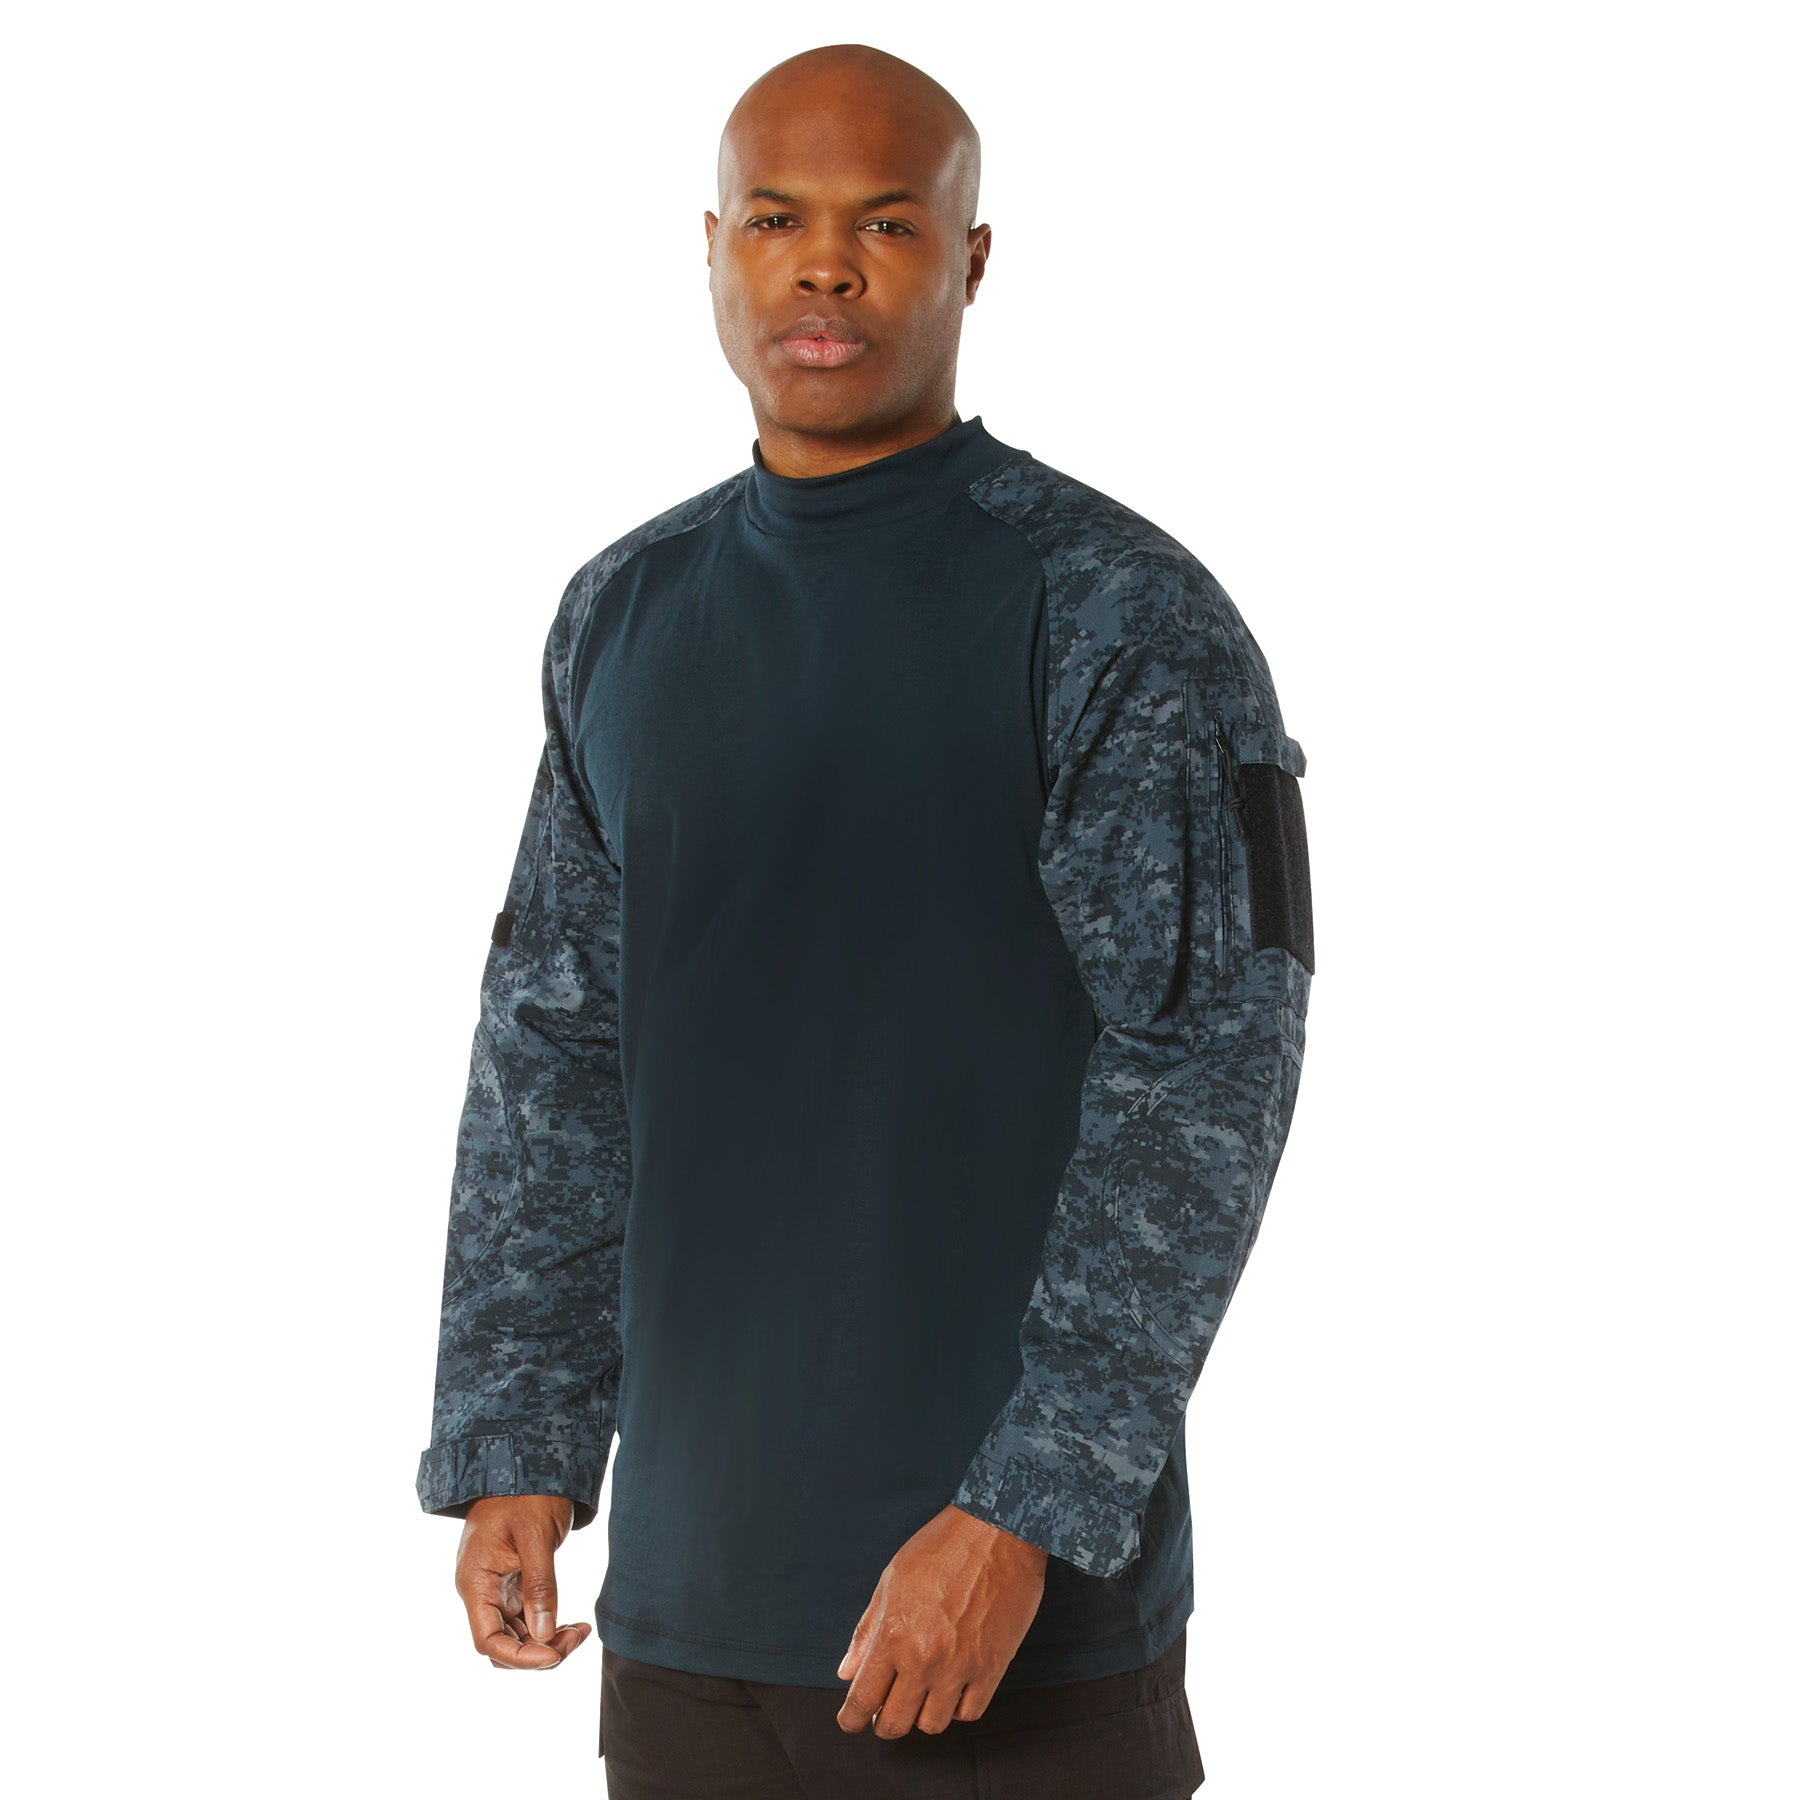 [Military][Fire Retardant] Digital Camo Acrylic/Cotton/Nylon/Cotton Combat Shirts Midnight Blue Digital Camo